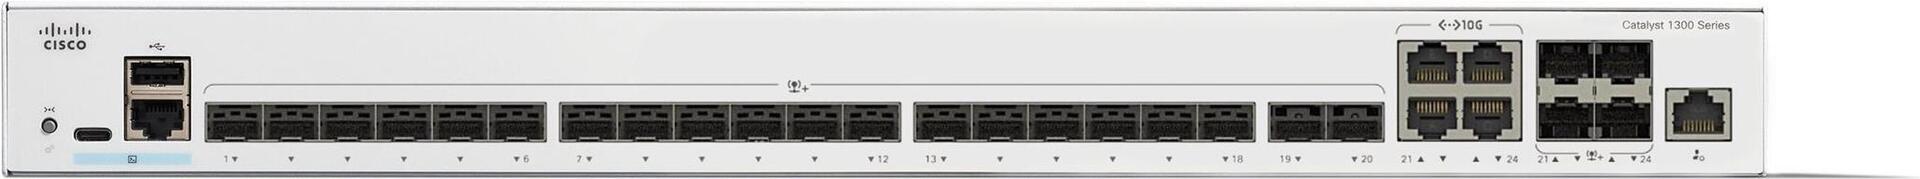 Cisco Catalyst 1300-24XS (C1300-24XS)